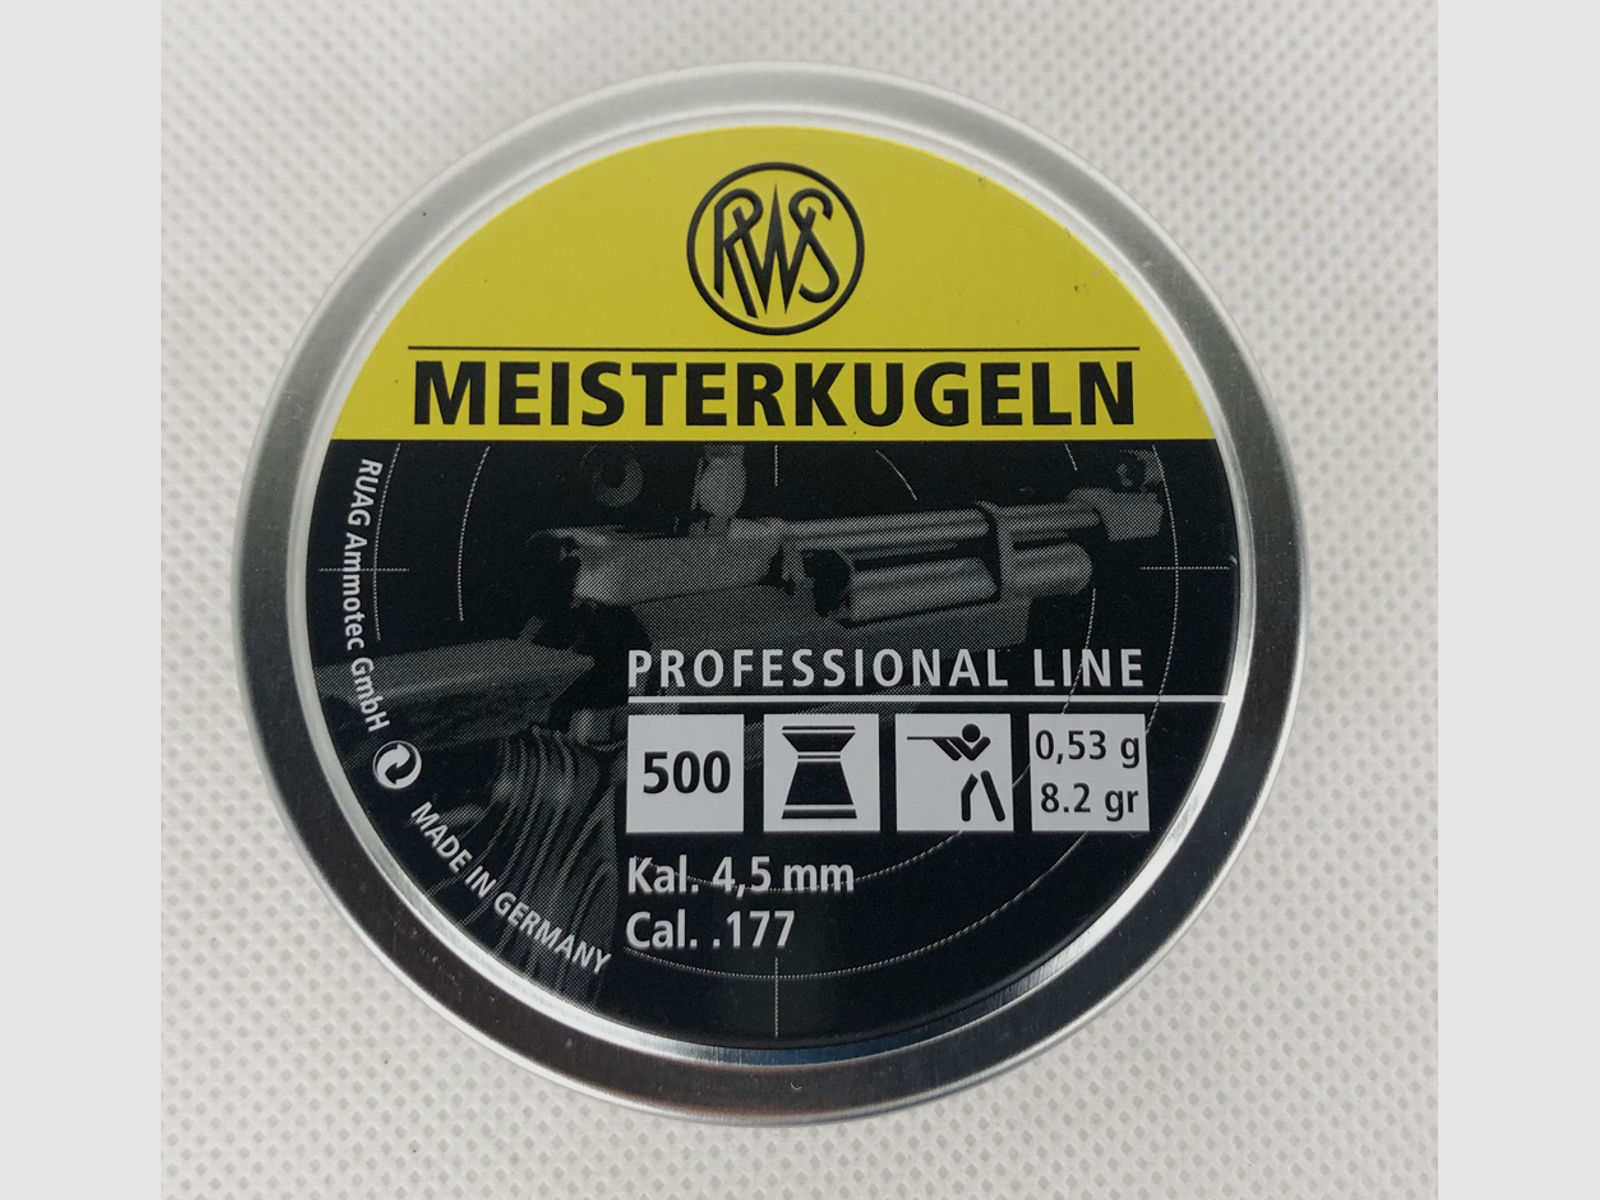 RWS Professional Line Diabolos Meisterkugeln 0,53g